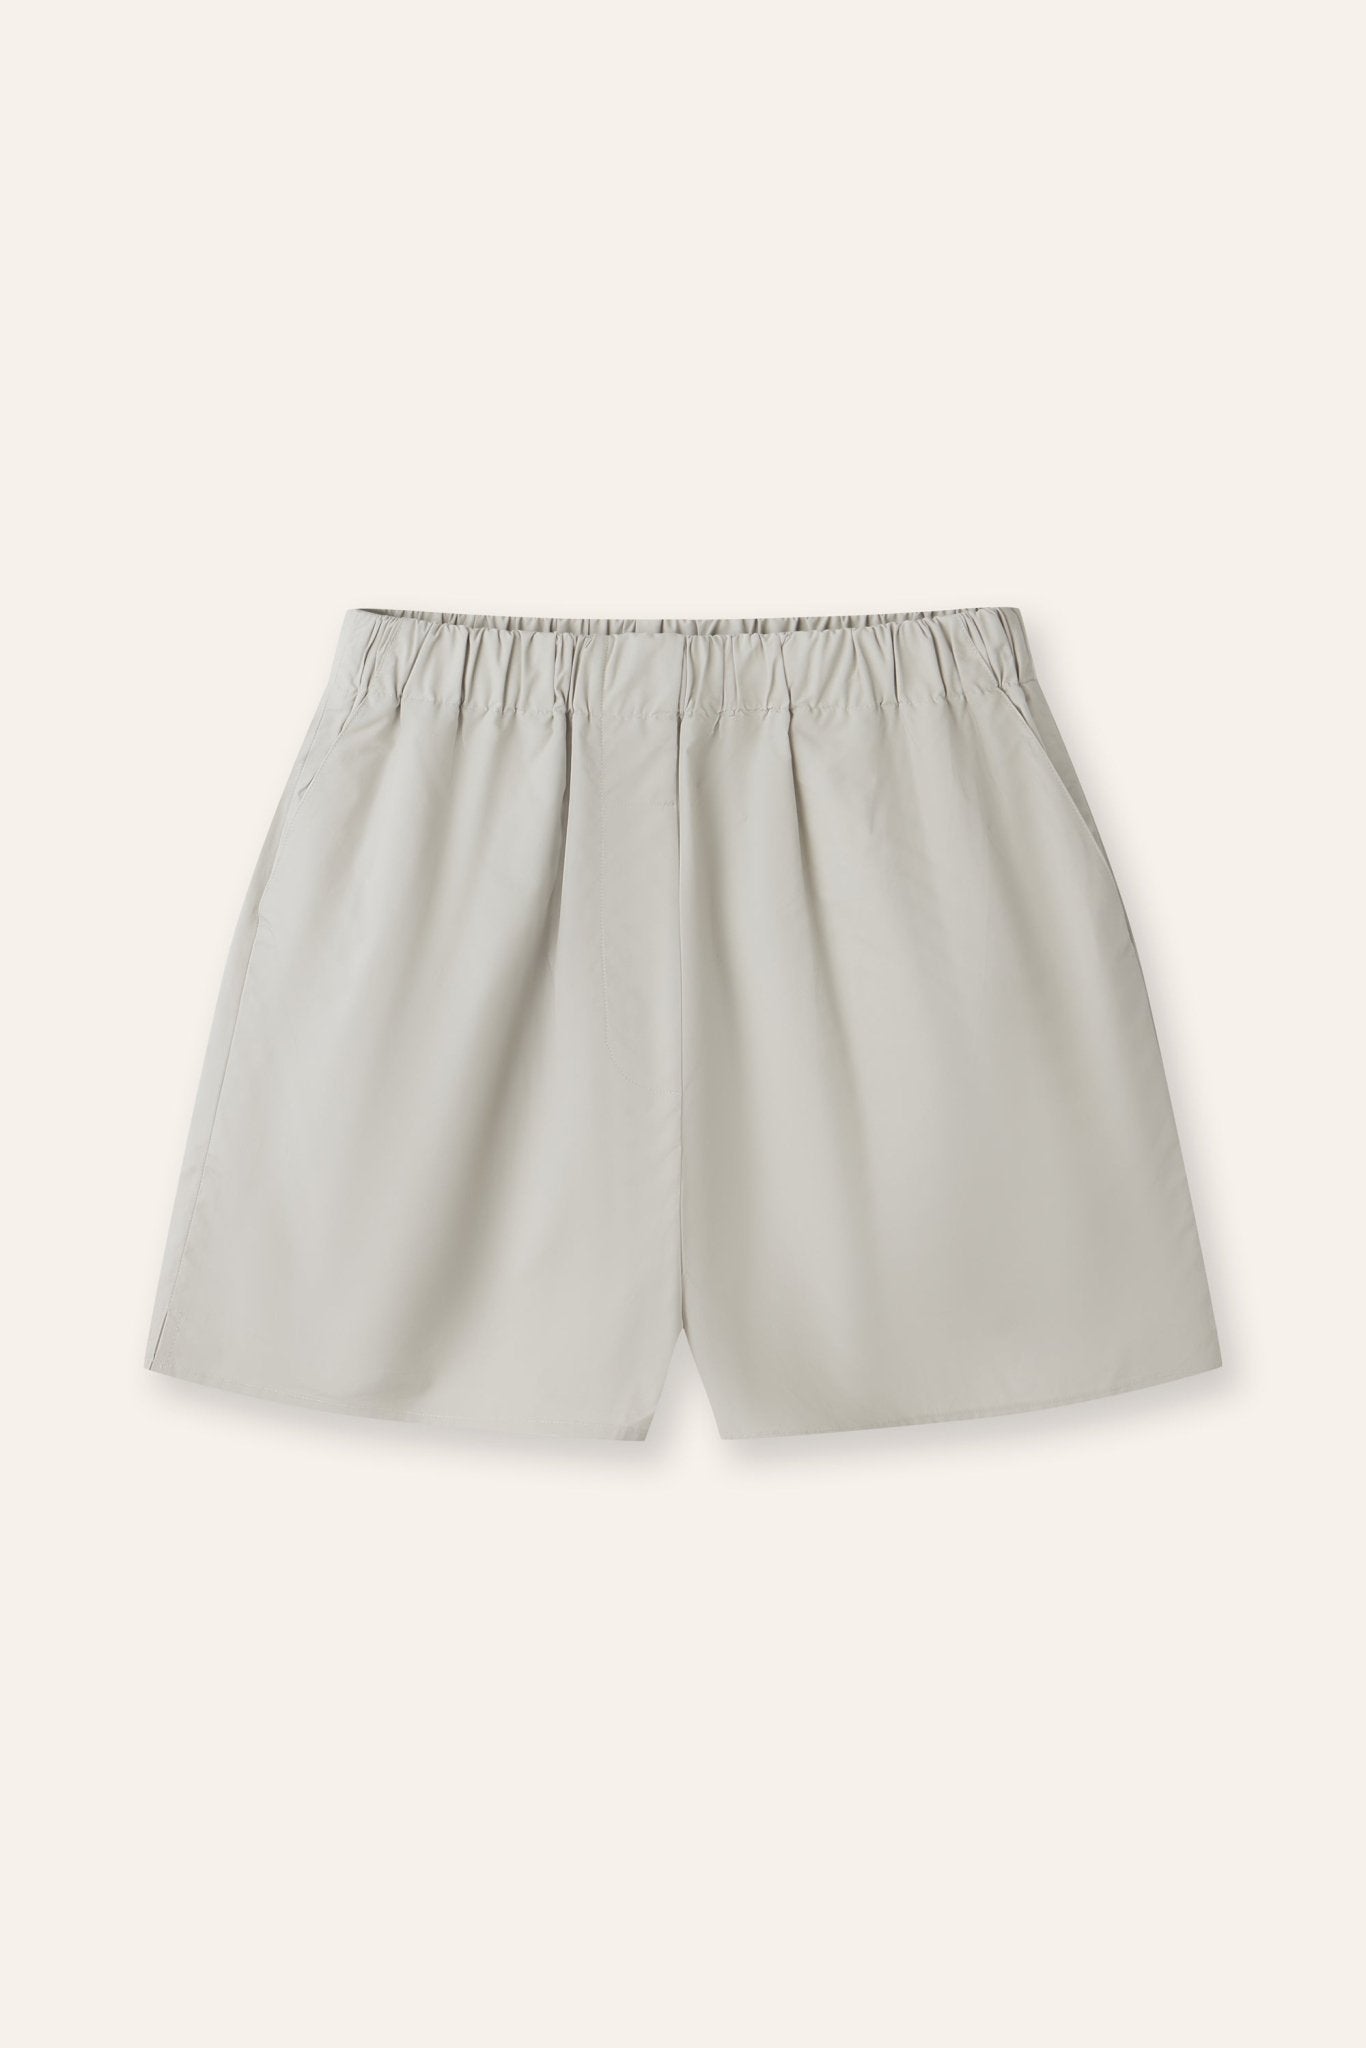 LUI cotton shorts (Light grey) - STELLAM